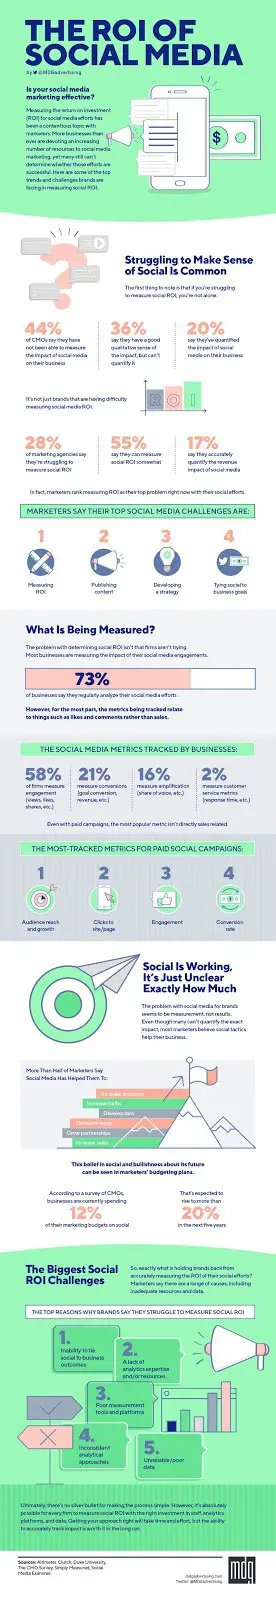 ROI social media statistics infographic